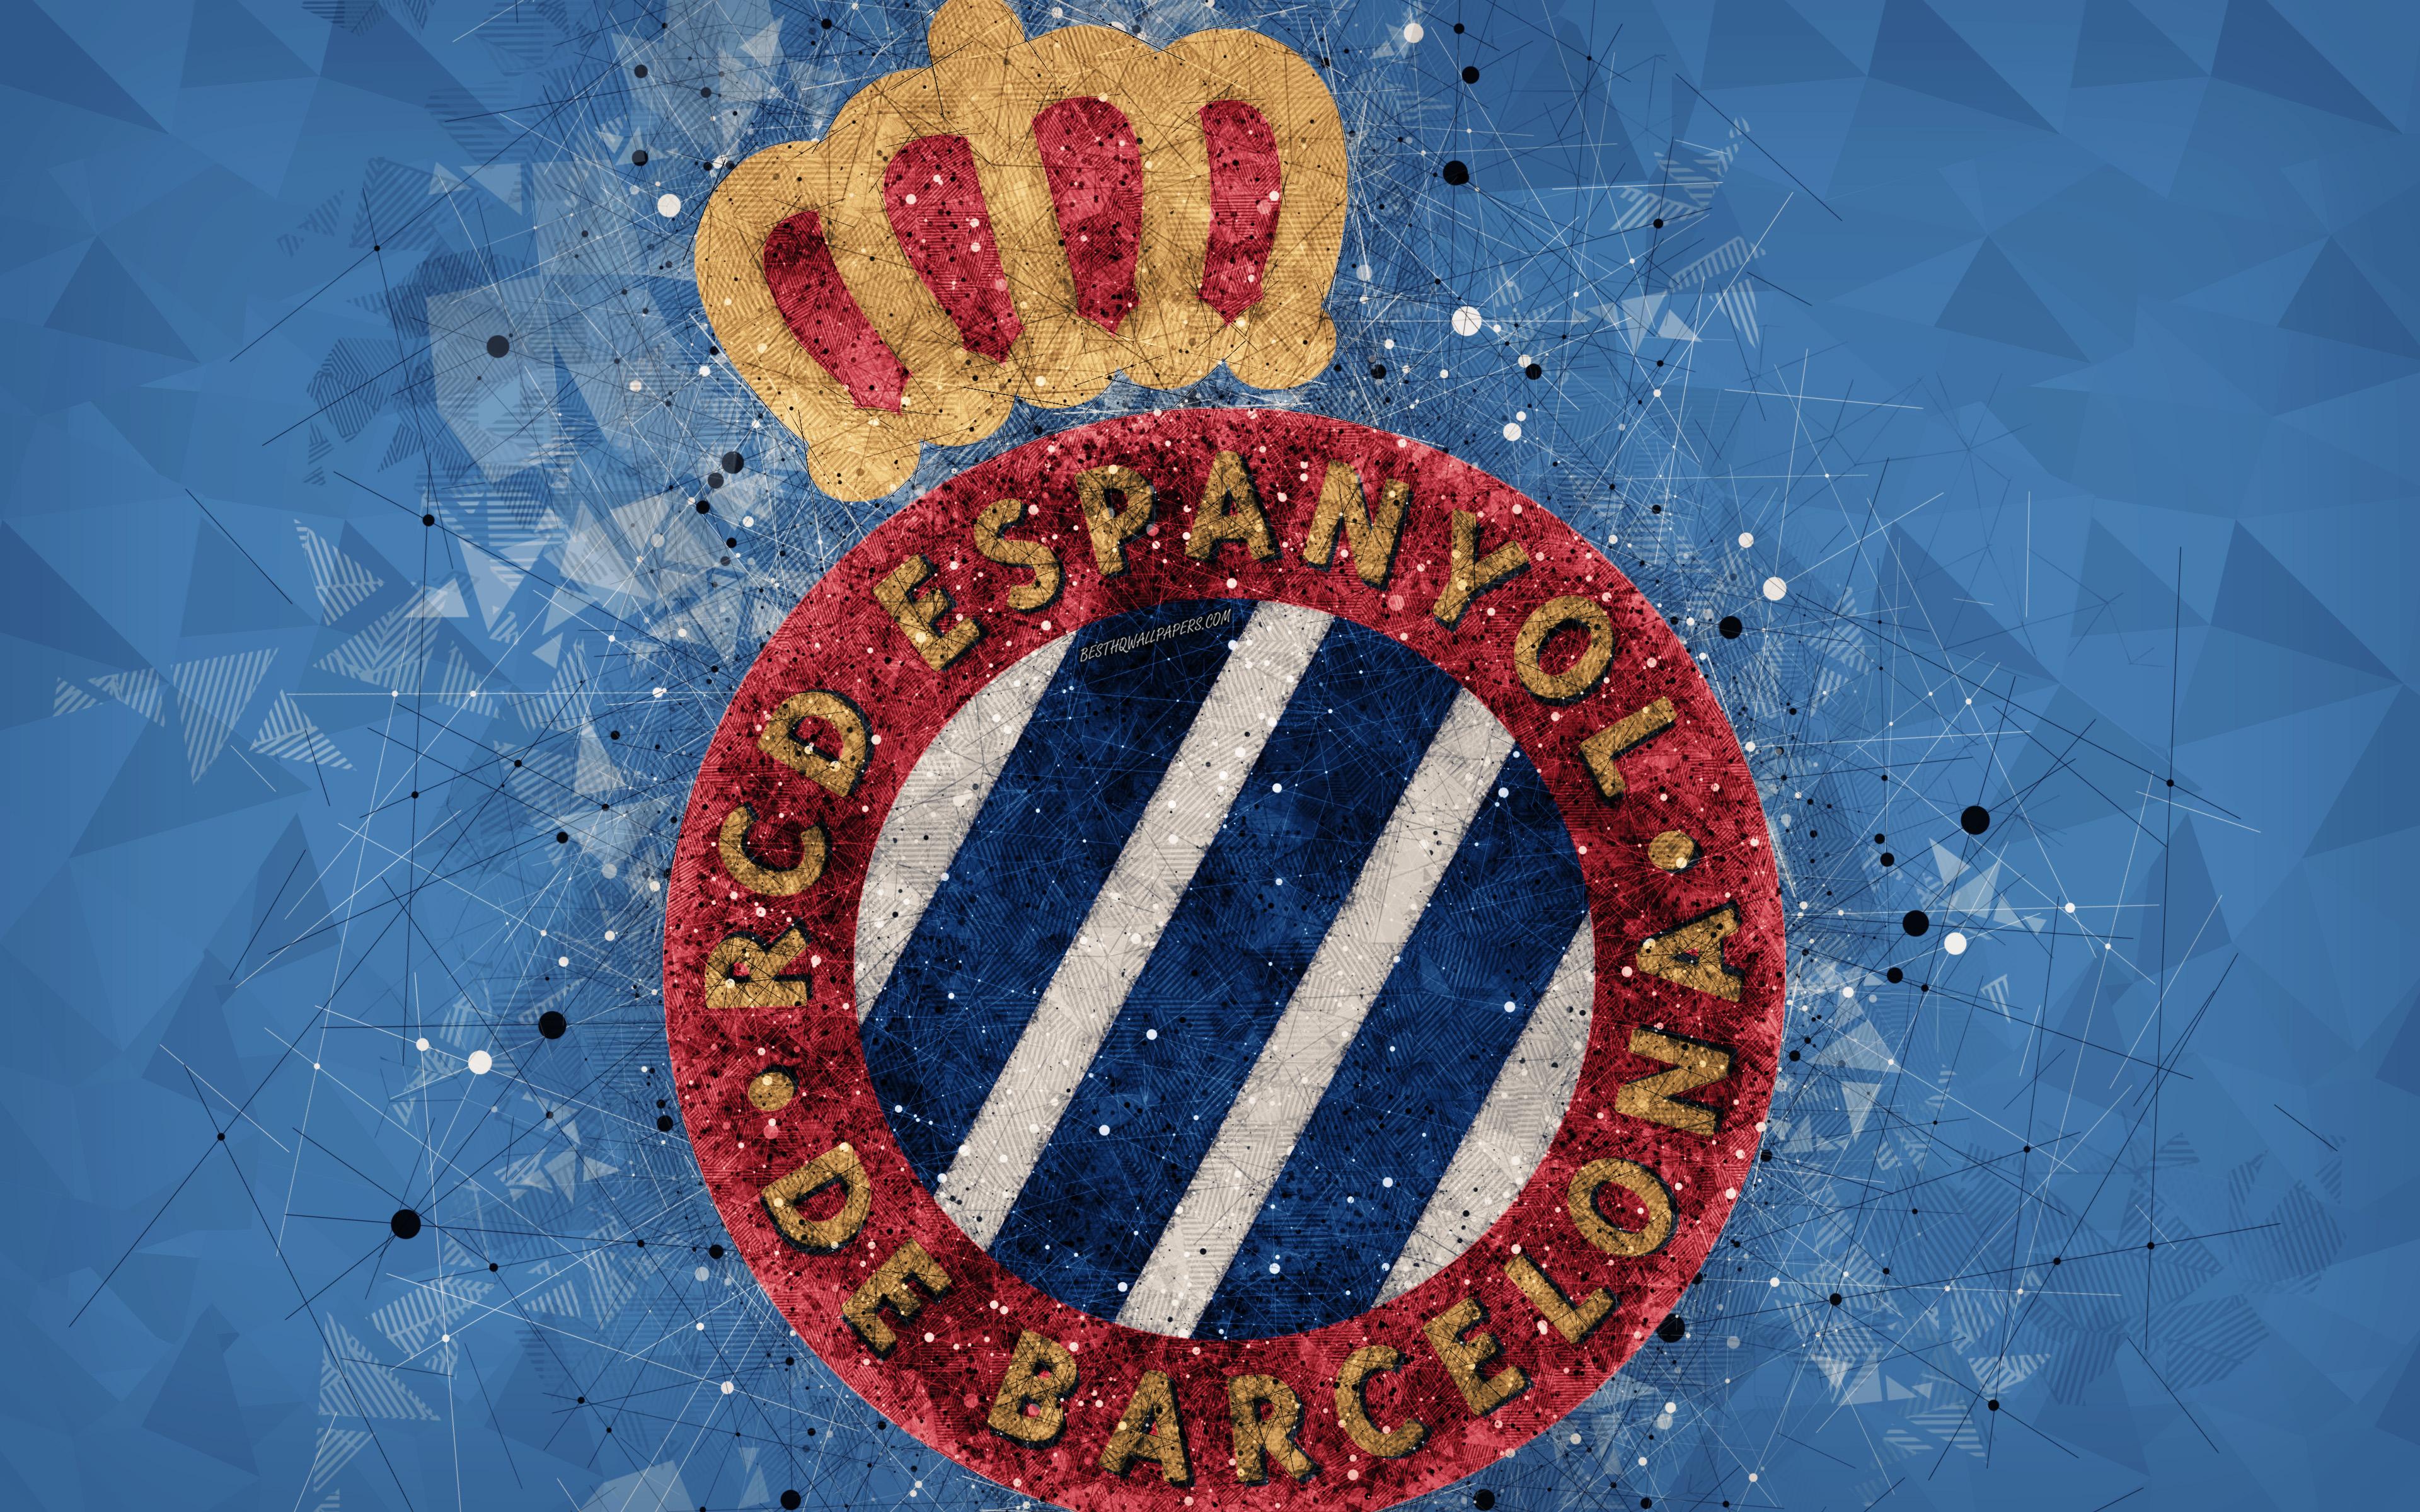 Download wallpaper RCD Espanyol, 4k, creative logo, Spanish